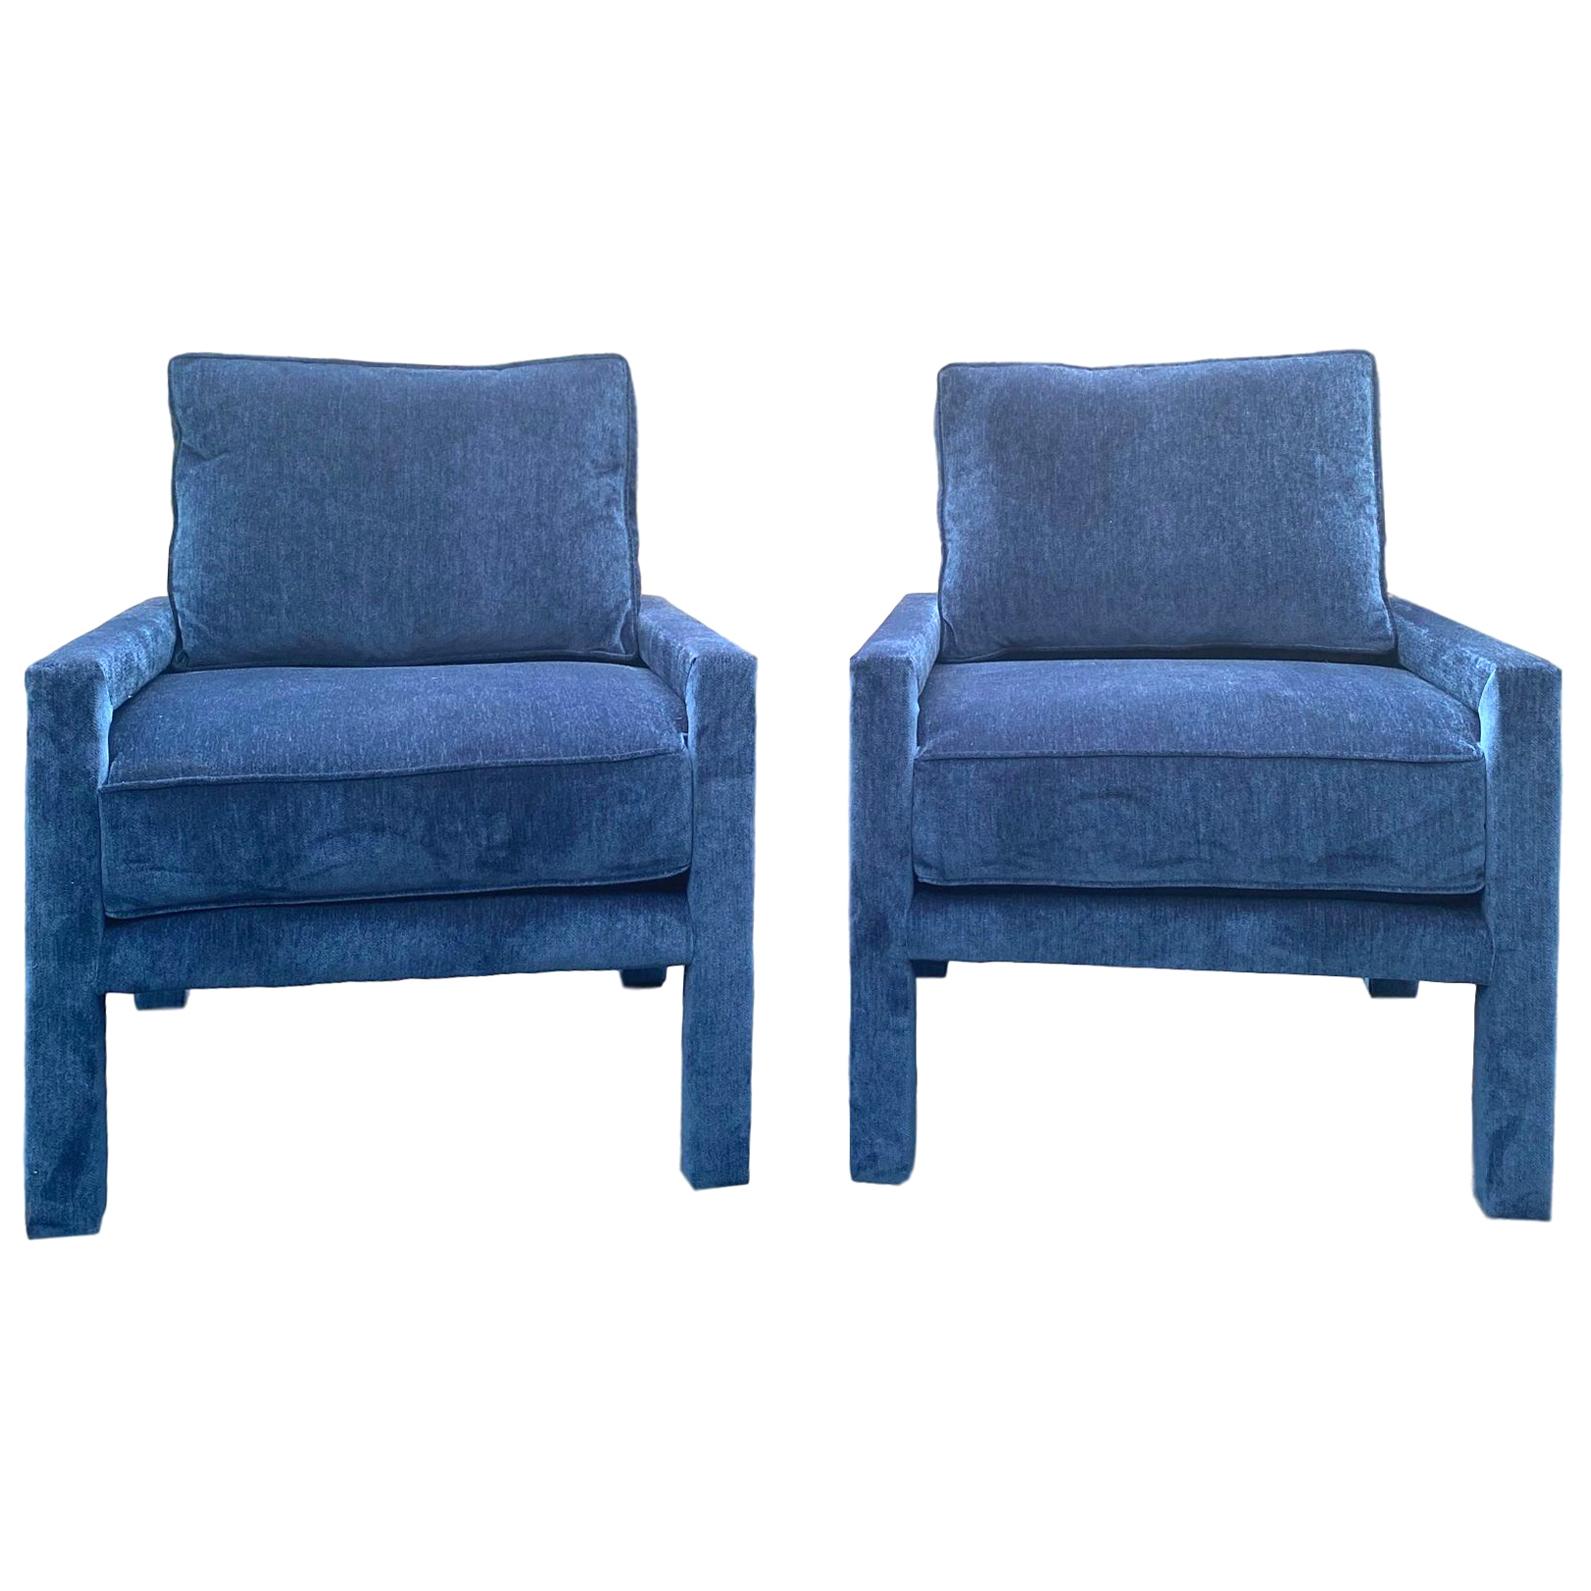 Pair of New Milo Baughman Style Iconic Parsons Chairs, Pantone Blue Velvet